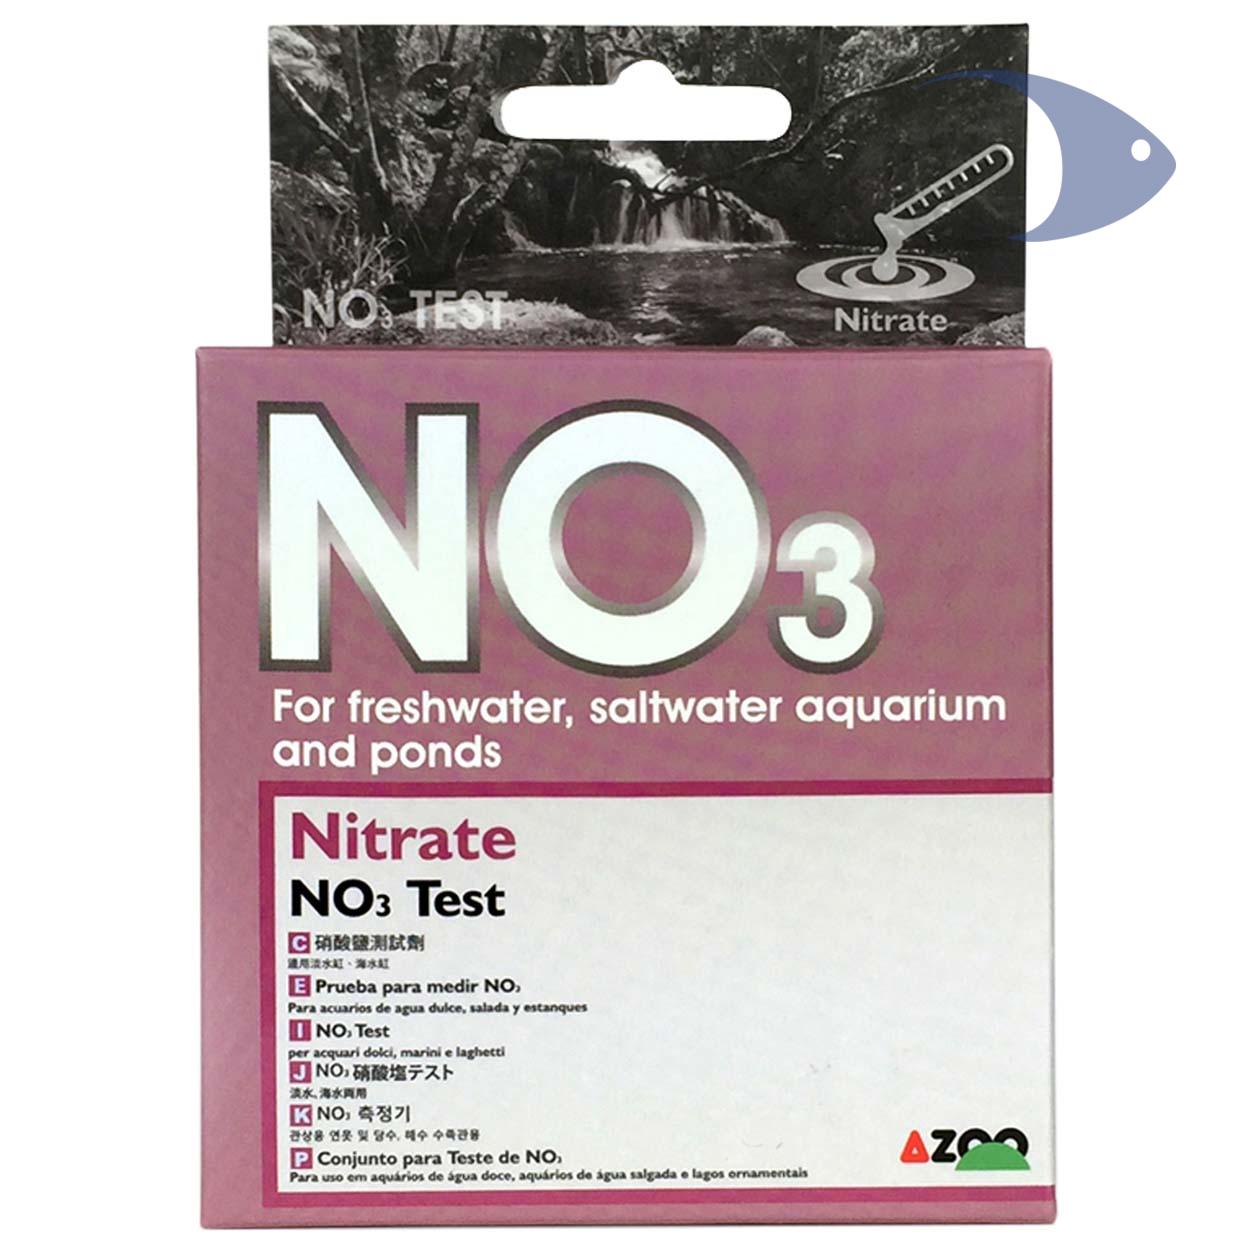 AZOO NO3 Test medición nitratos nº1 en acuarios de todo